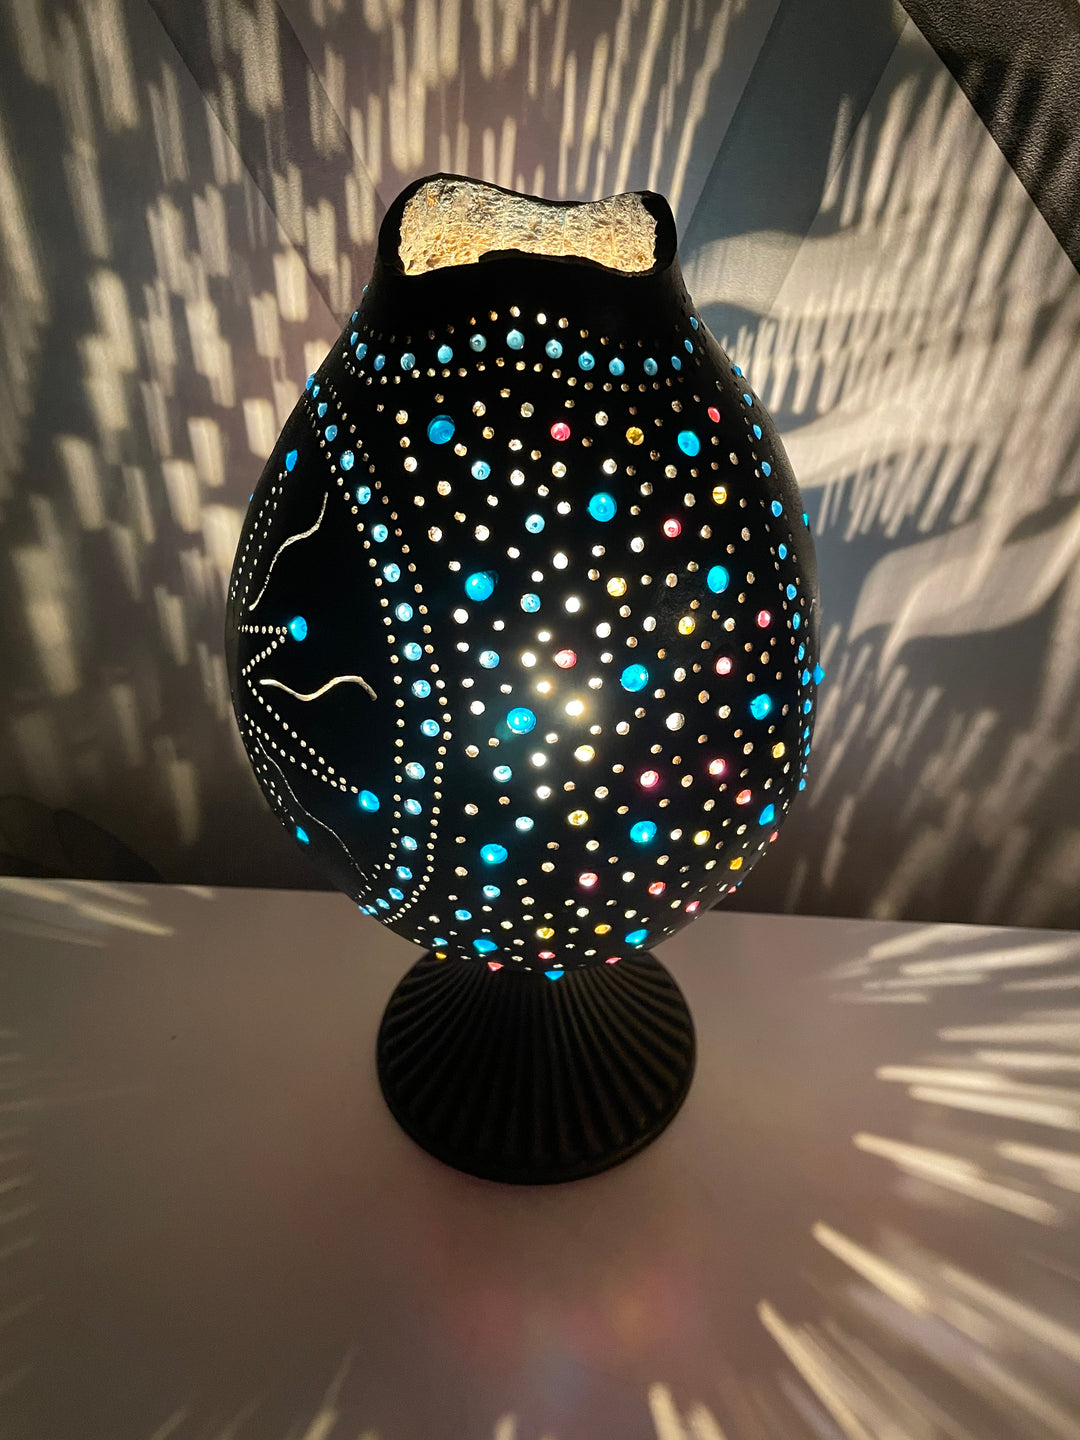 Gourd Lamp - Night Lamp - Lamp Shade - Light Object - Desk Lamp - Light Object - the sun 5